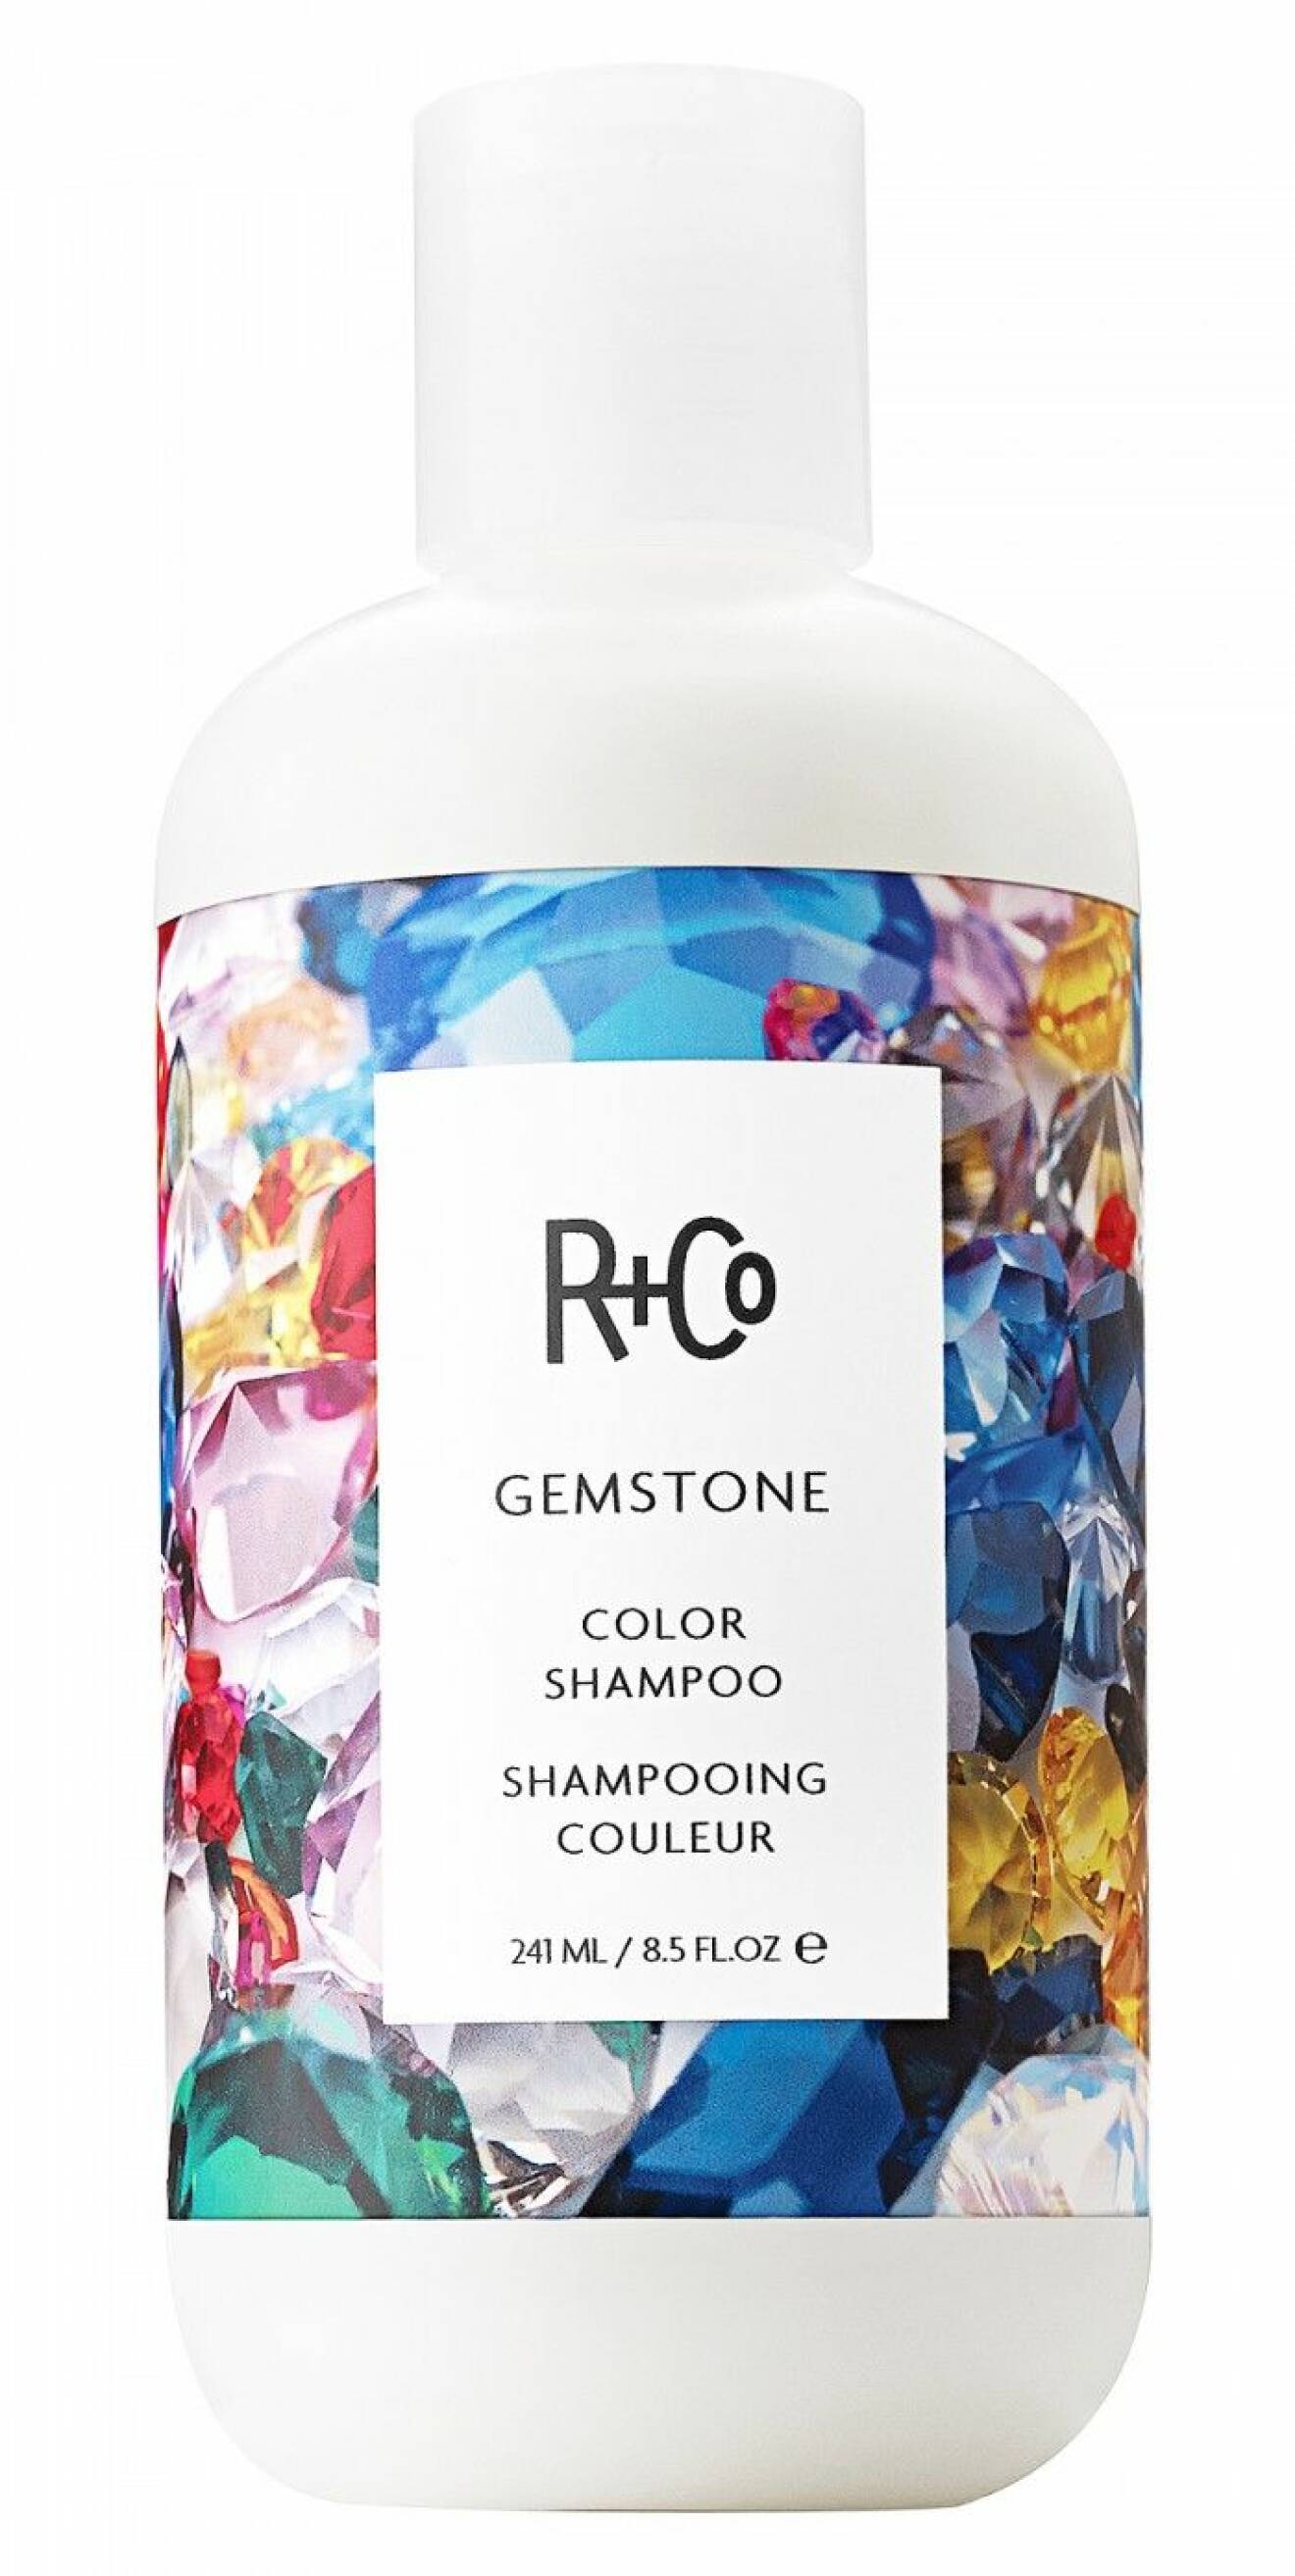 Gemstone_color_shampoo